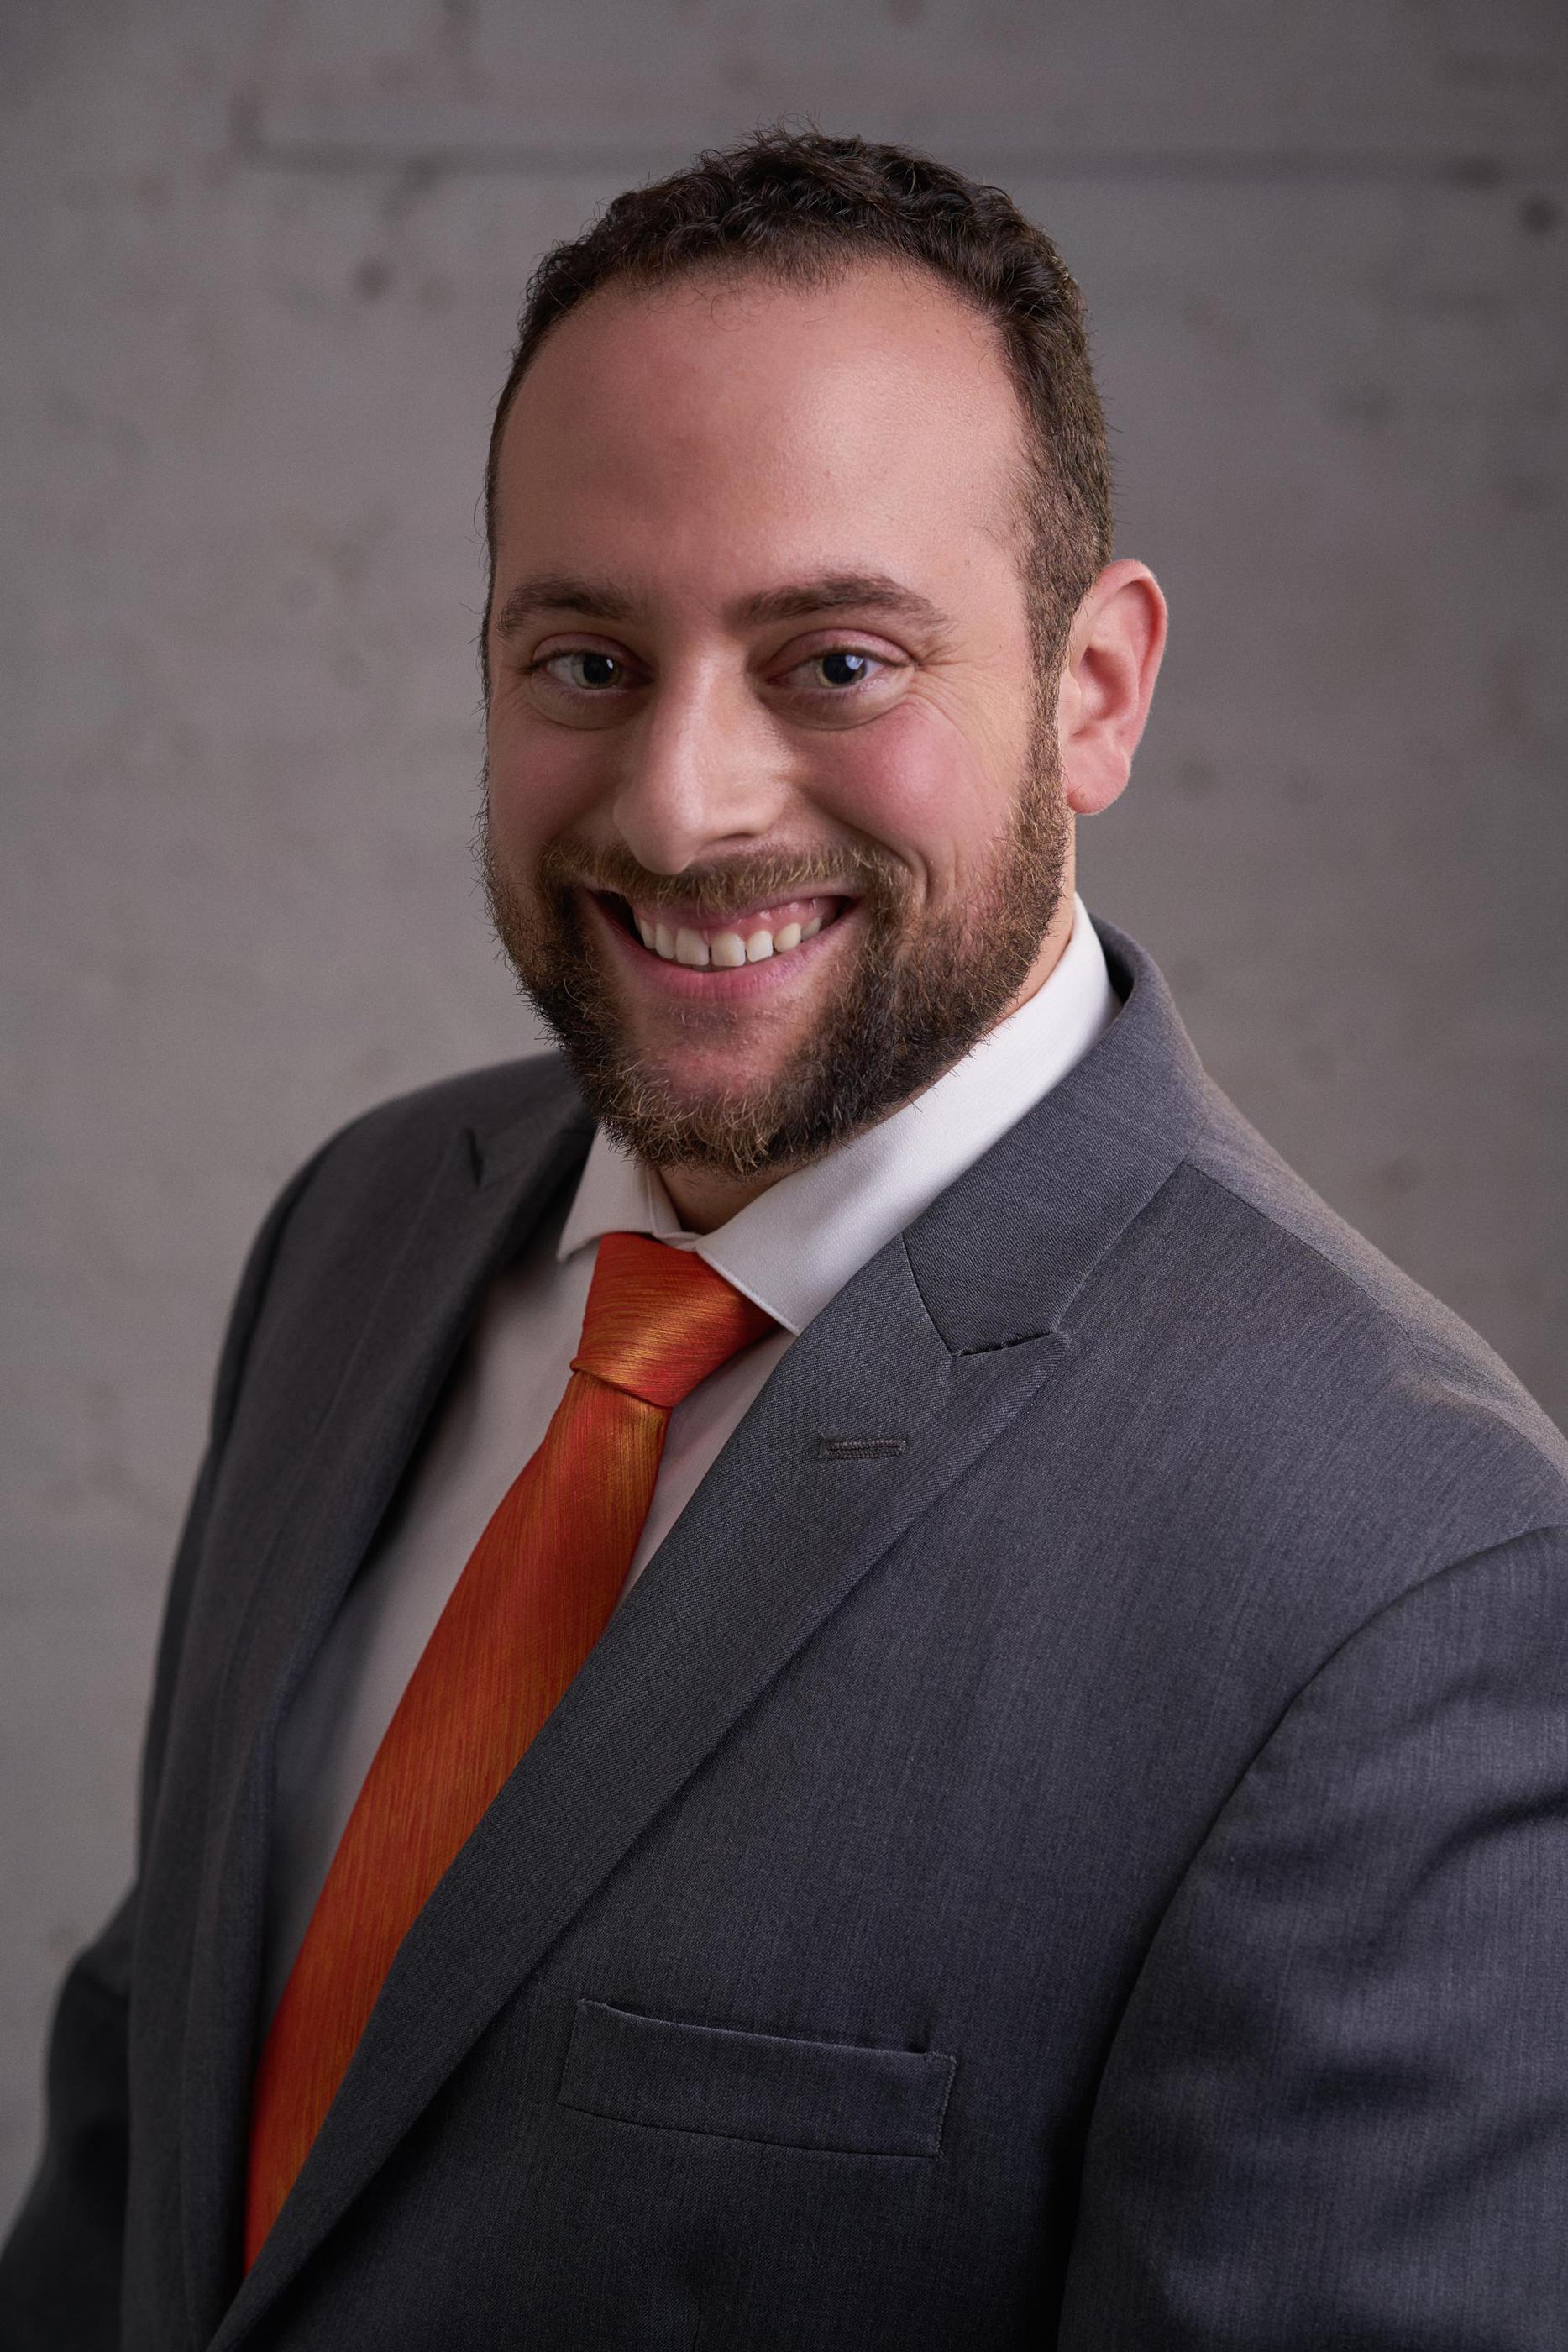 Man in a gray suit and orange necktie